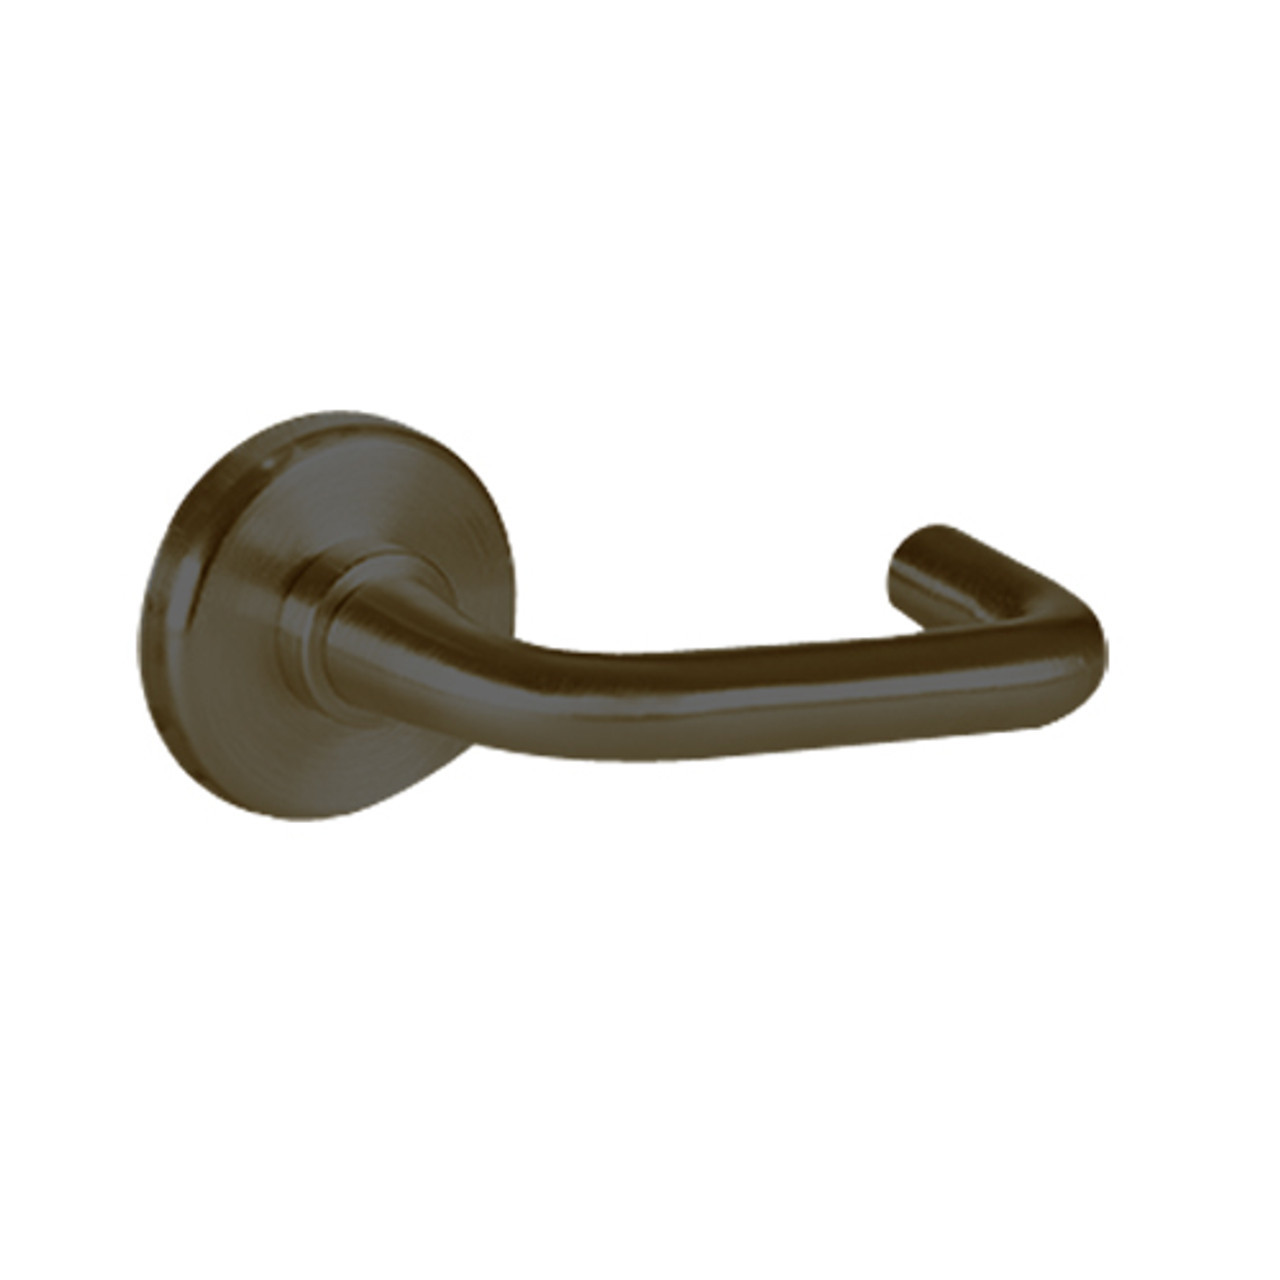 45HW7TDEL3H61312V Best 40HW series Single Key Deadbolt Fail Safe Electromechanical Mortise Lever Lock with Solid Tube w/ Return Style in Oil Rubbed Bronze